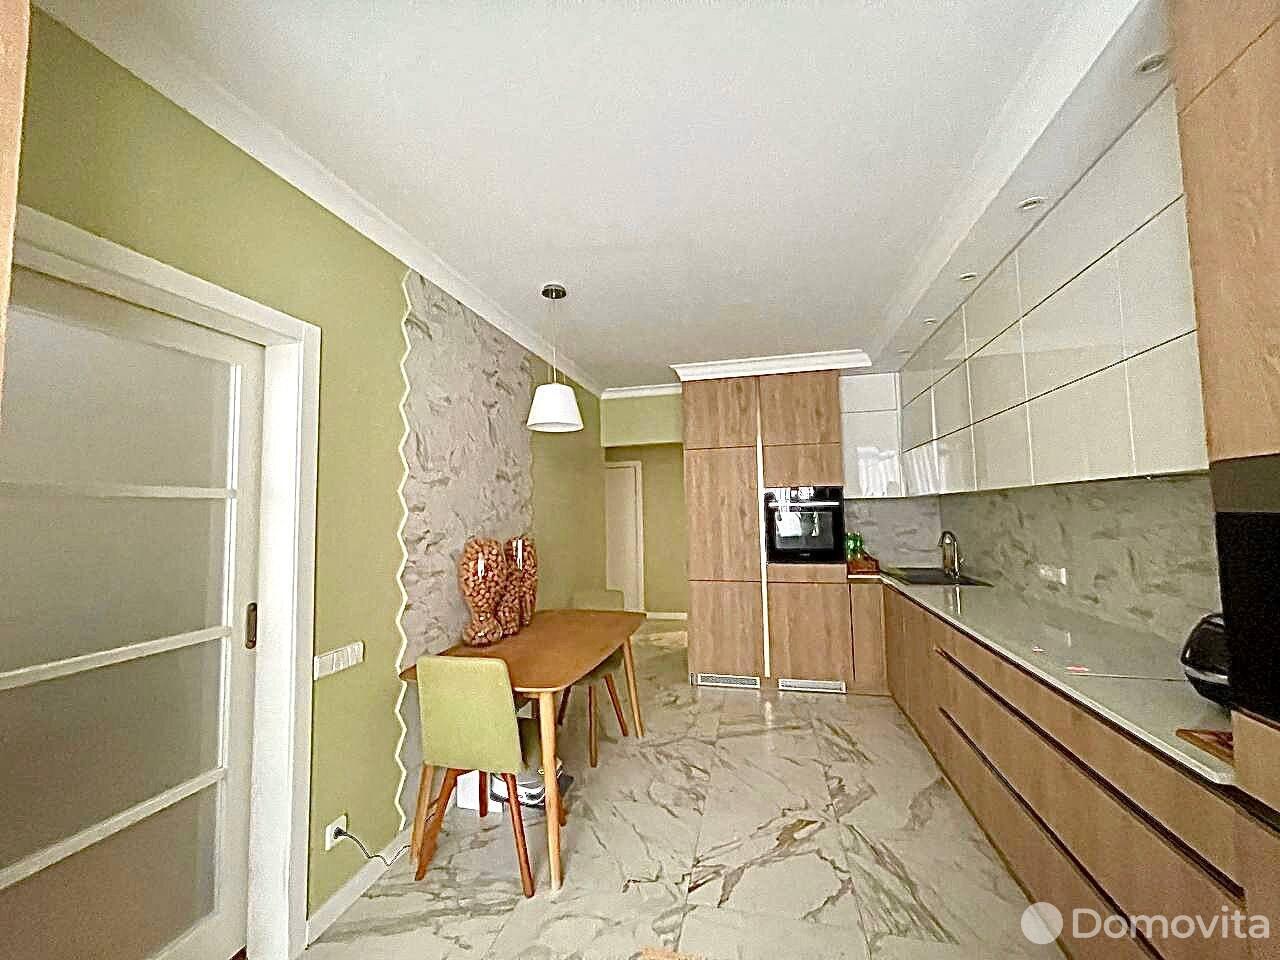 квартира, Минск, ул. Максима Богдановича, д. 140, стоимость продажи 627 373 р.